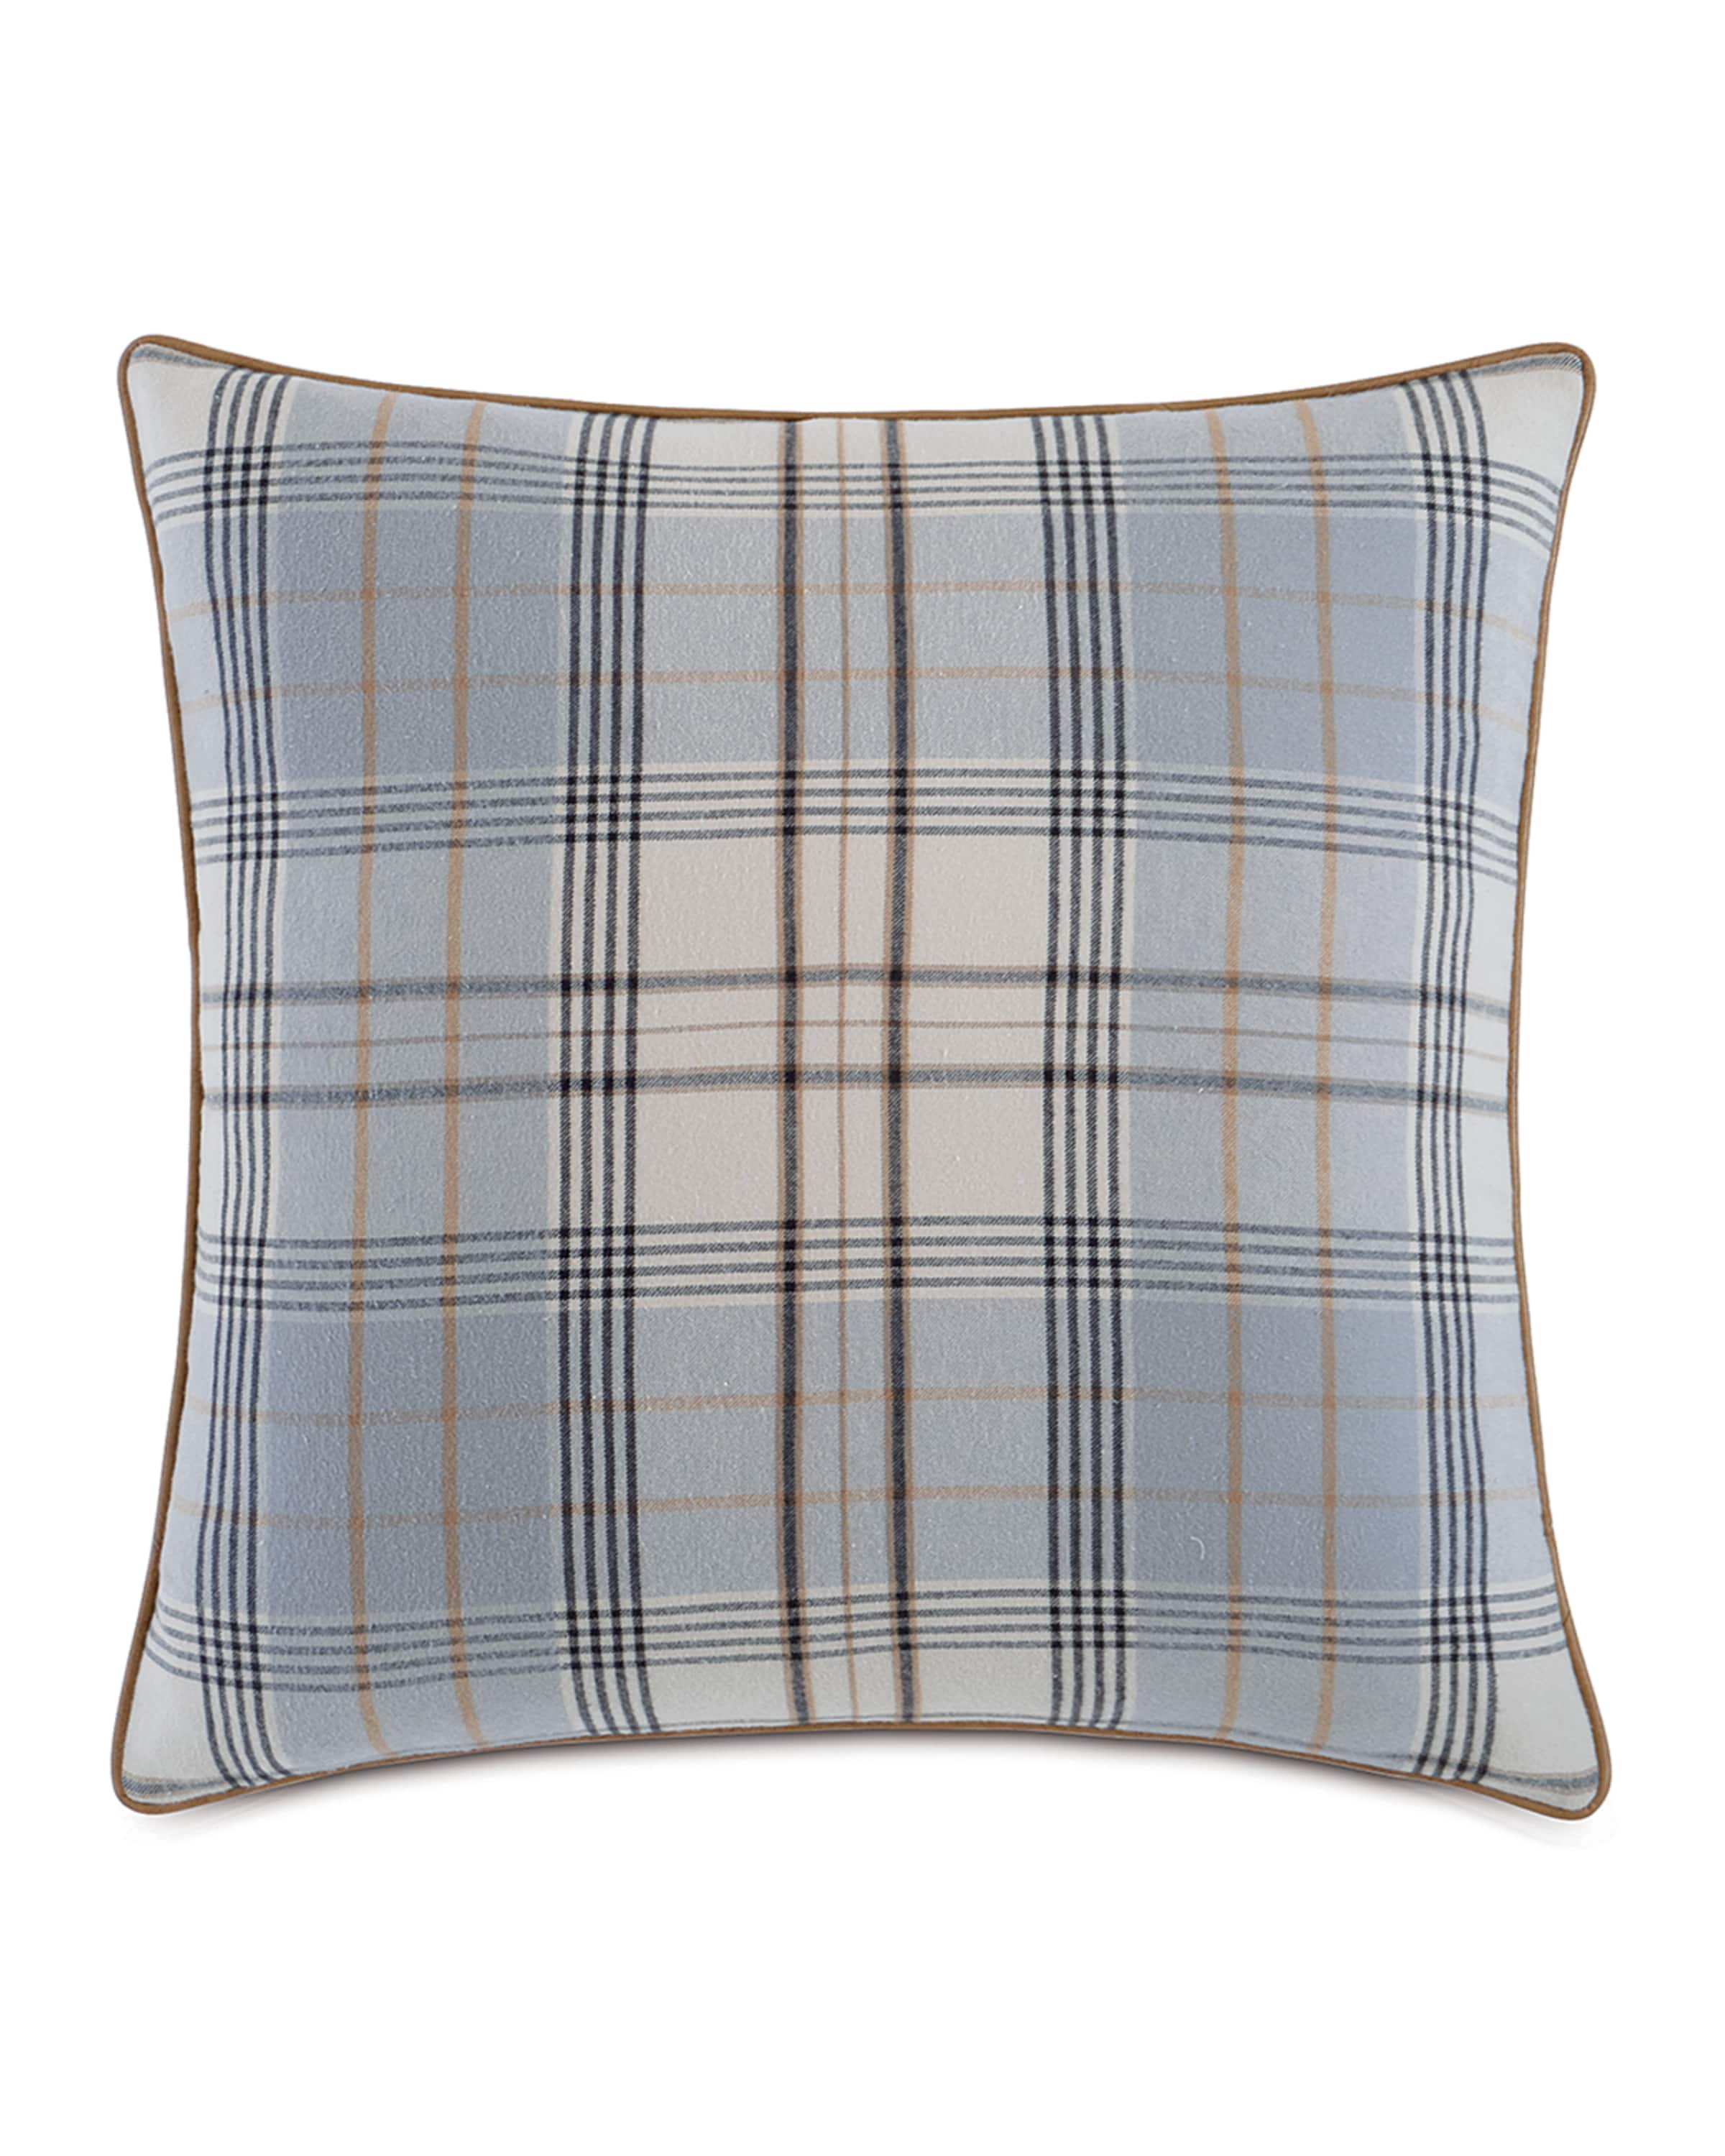 Eastern Accents Arthur Decorative Pillow